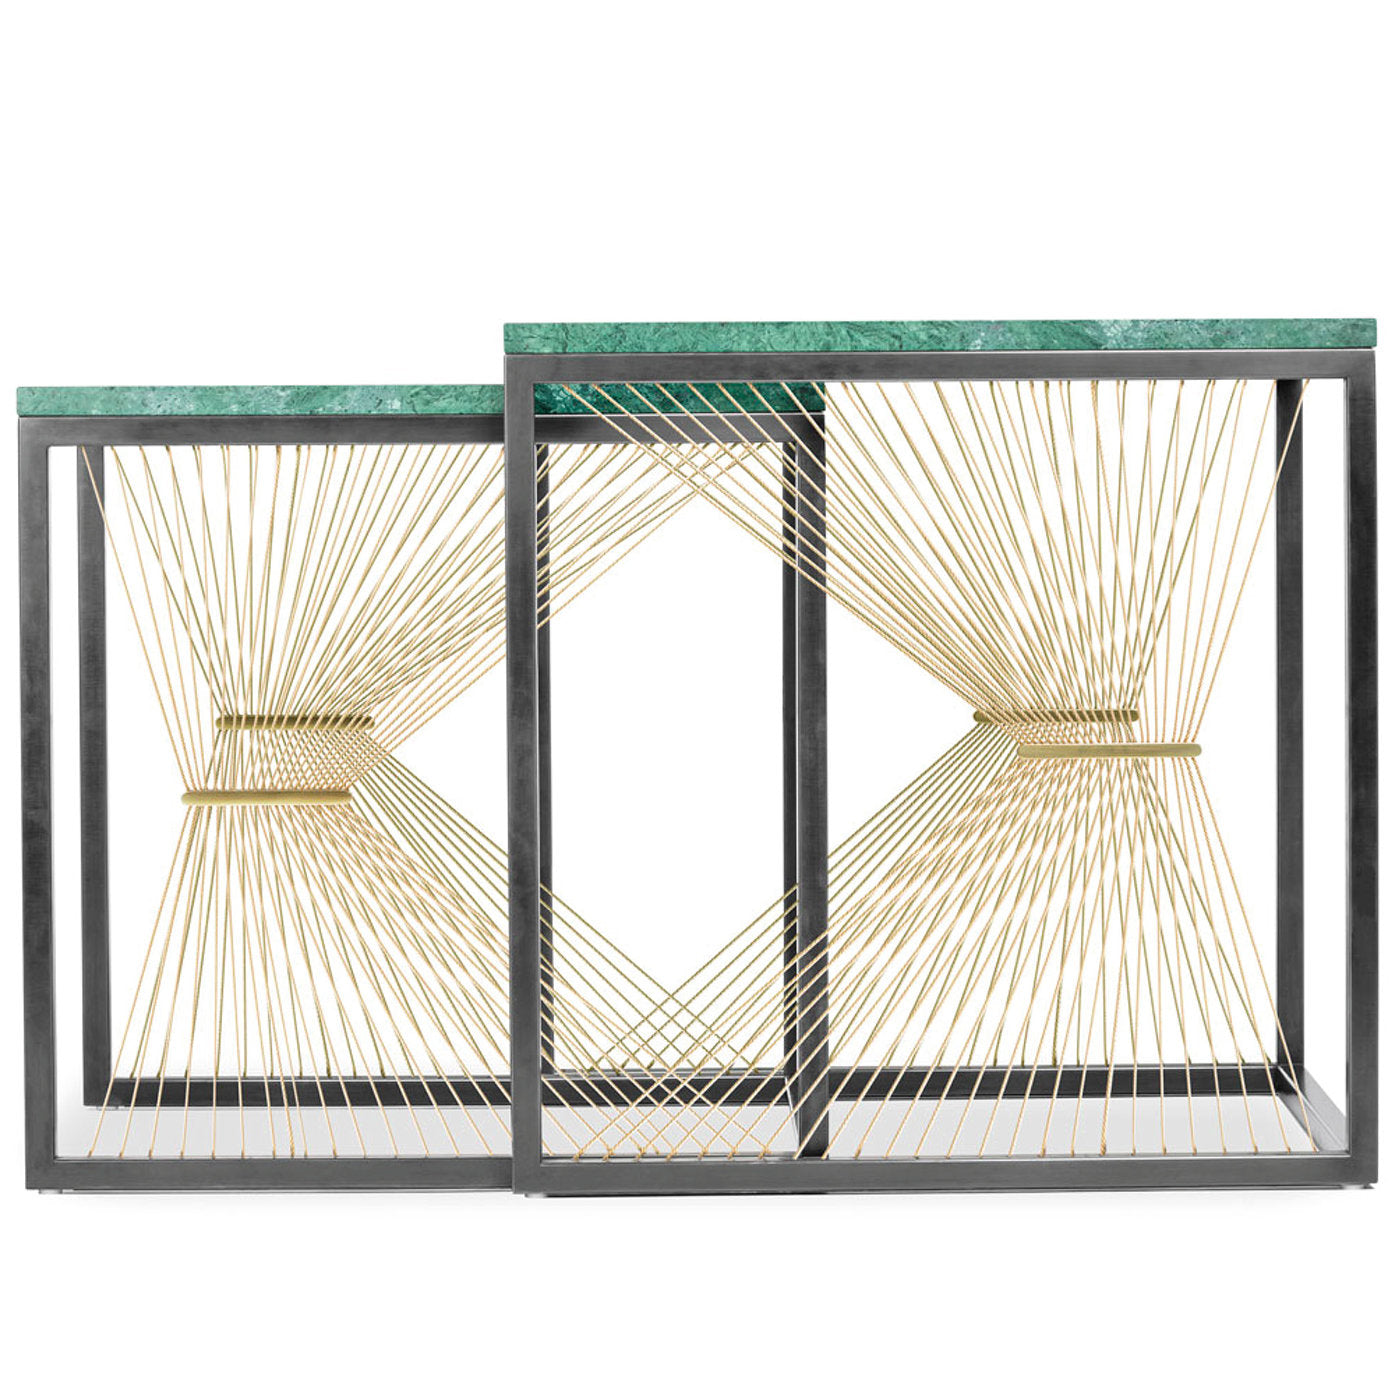 Aegis Set of 2 Nesting Tables by Ziad Alonaizy - Alternative view 1